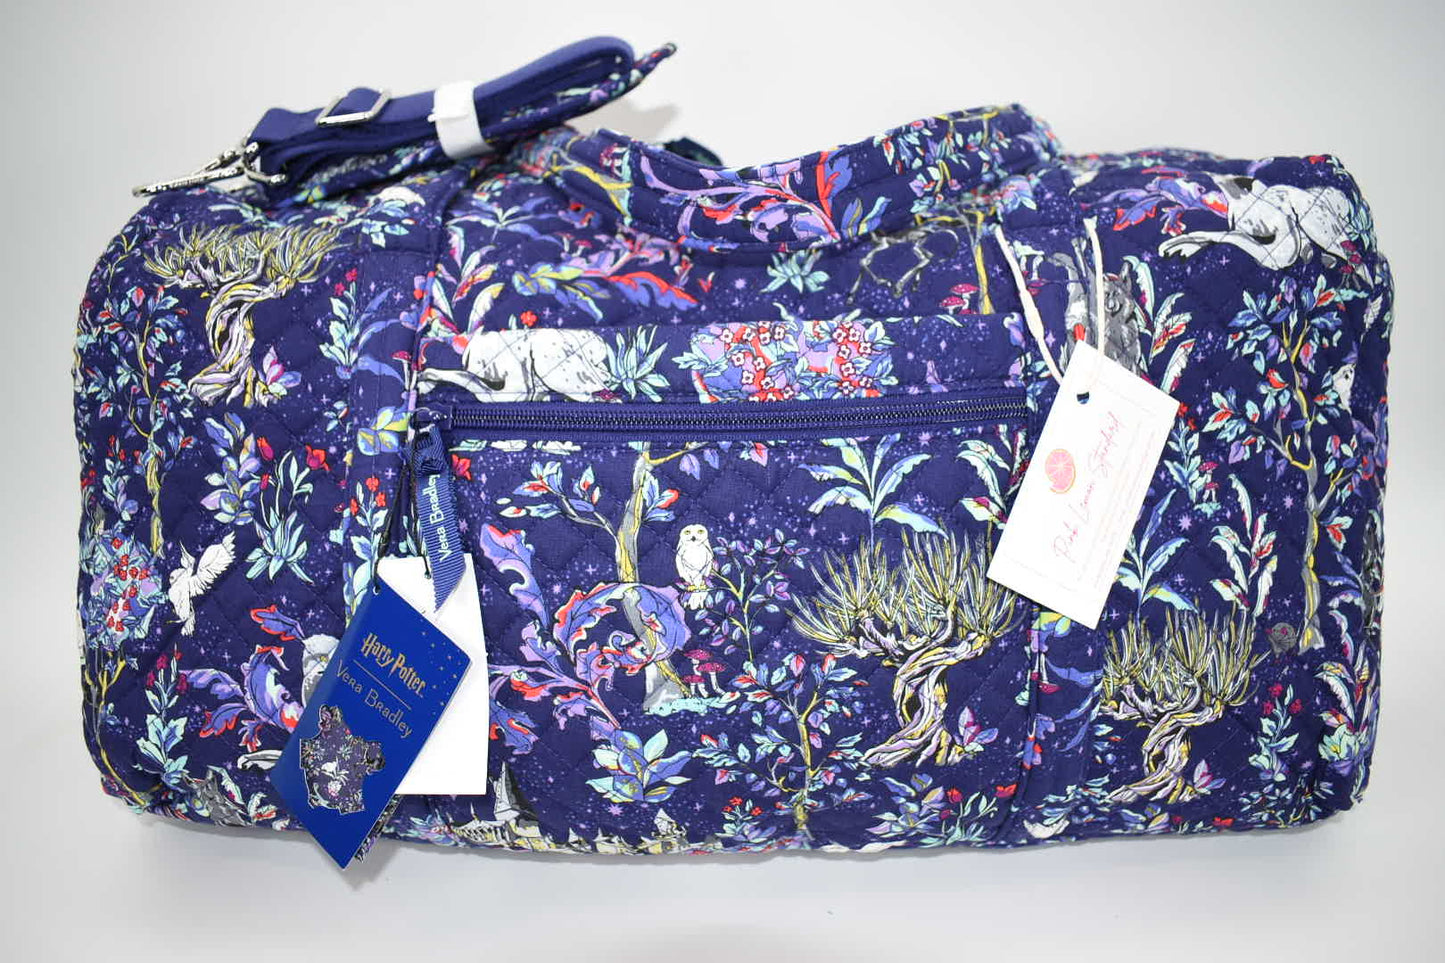 Vera Bradley Harry Potter™ Large Travel Duffel Bag in "Forbidden Forest" Pattern